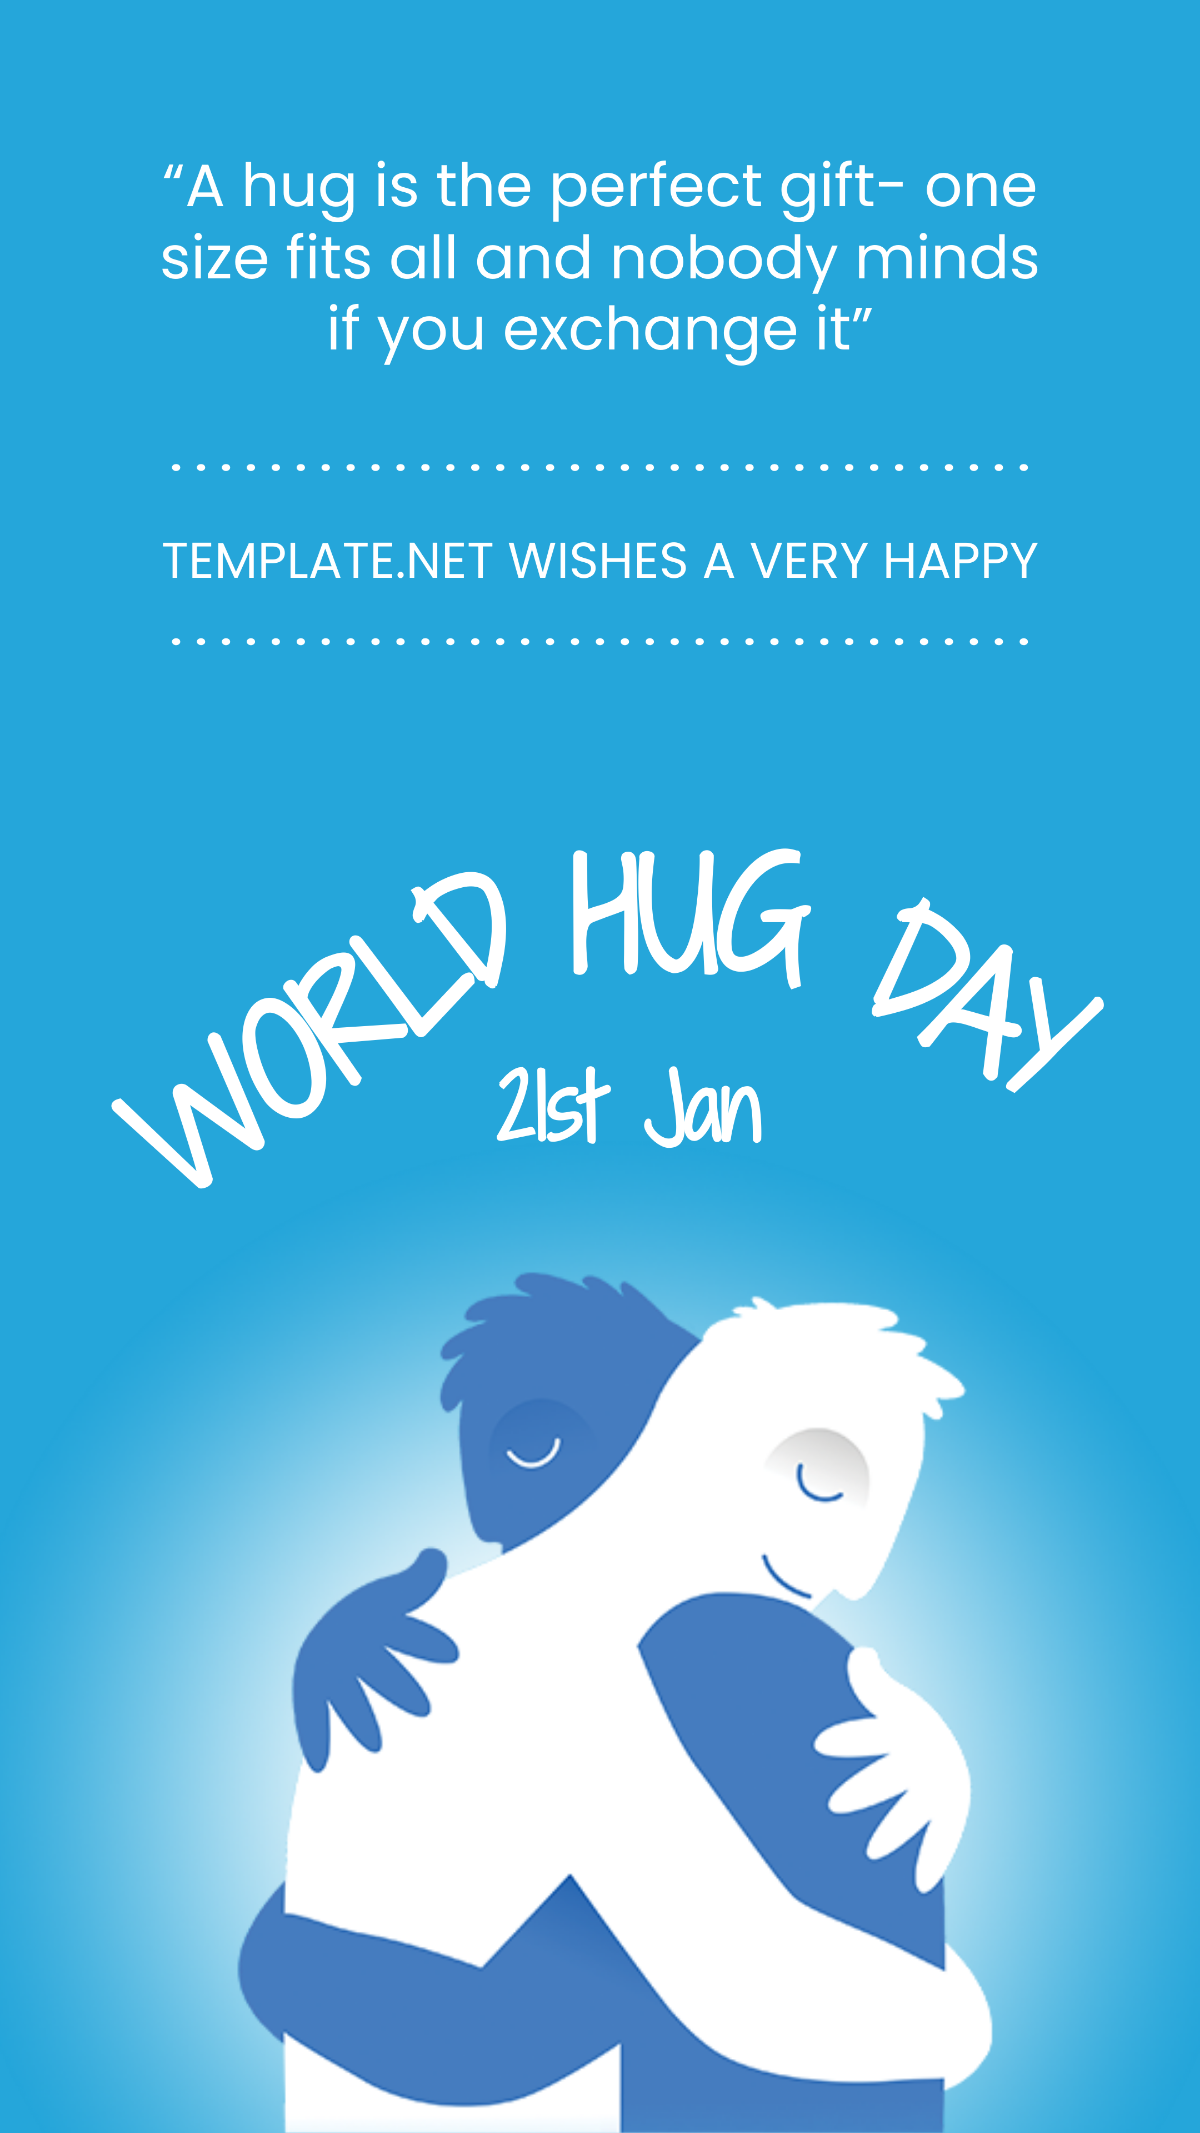 Free World Hug Day Whatsapp Image Template